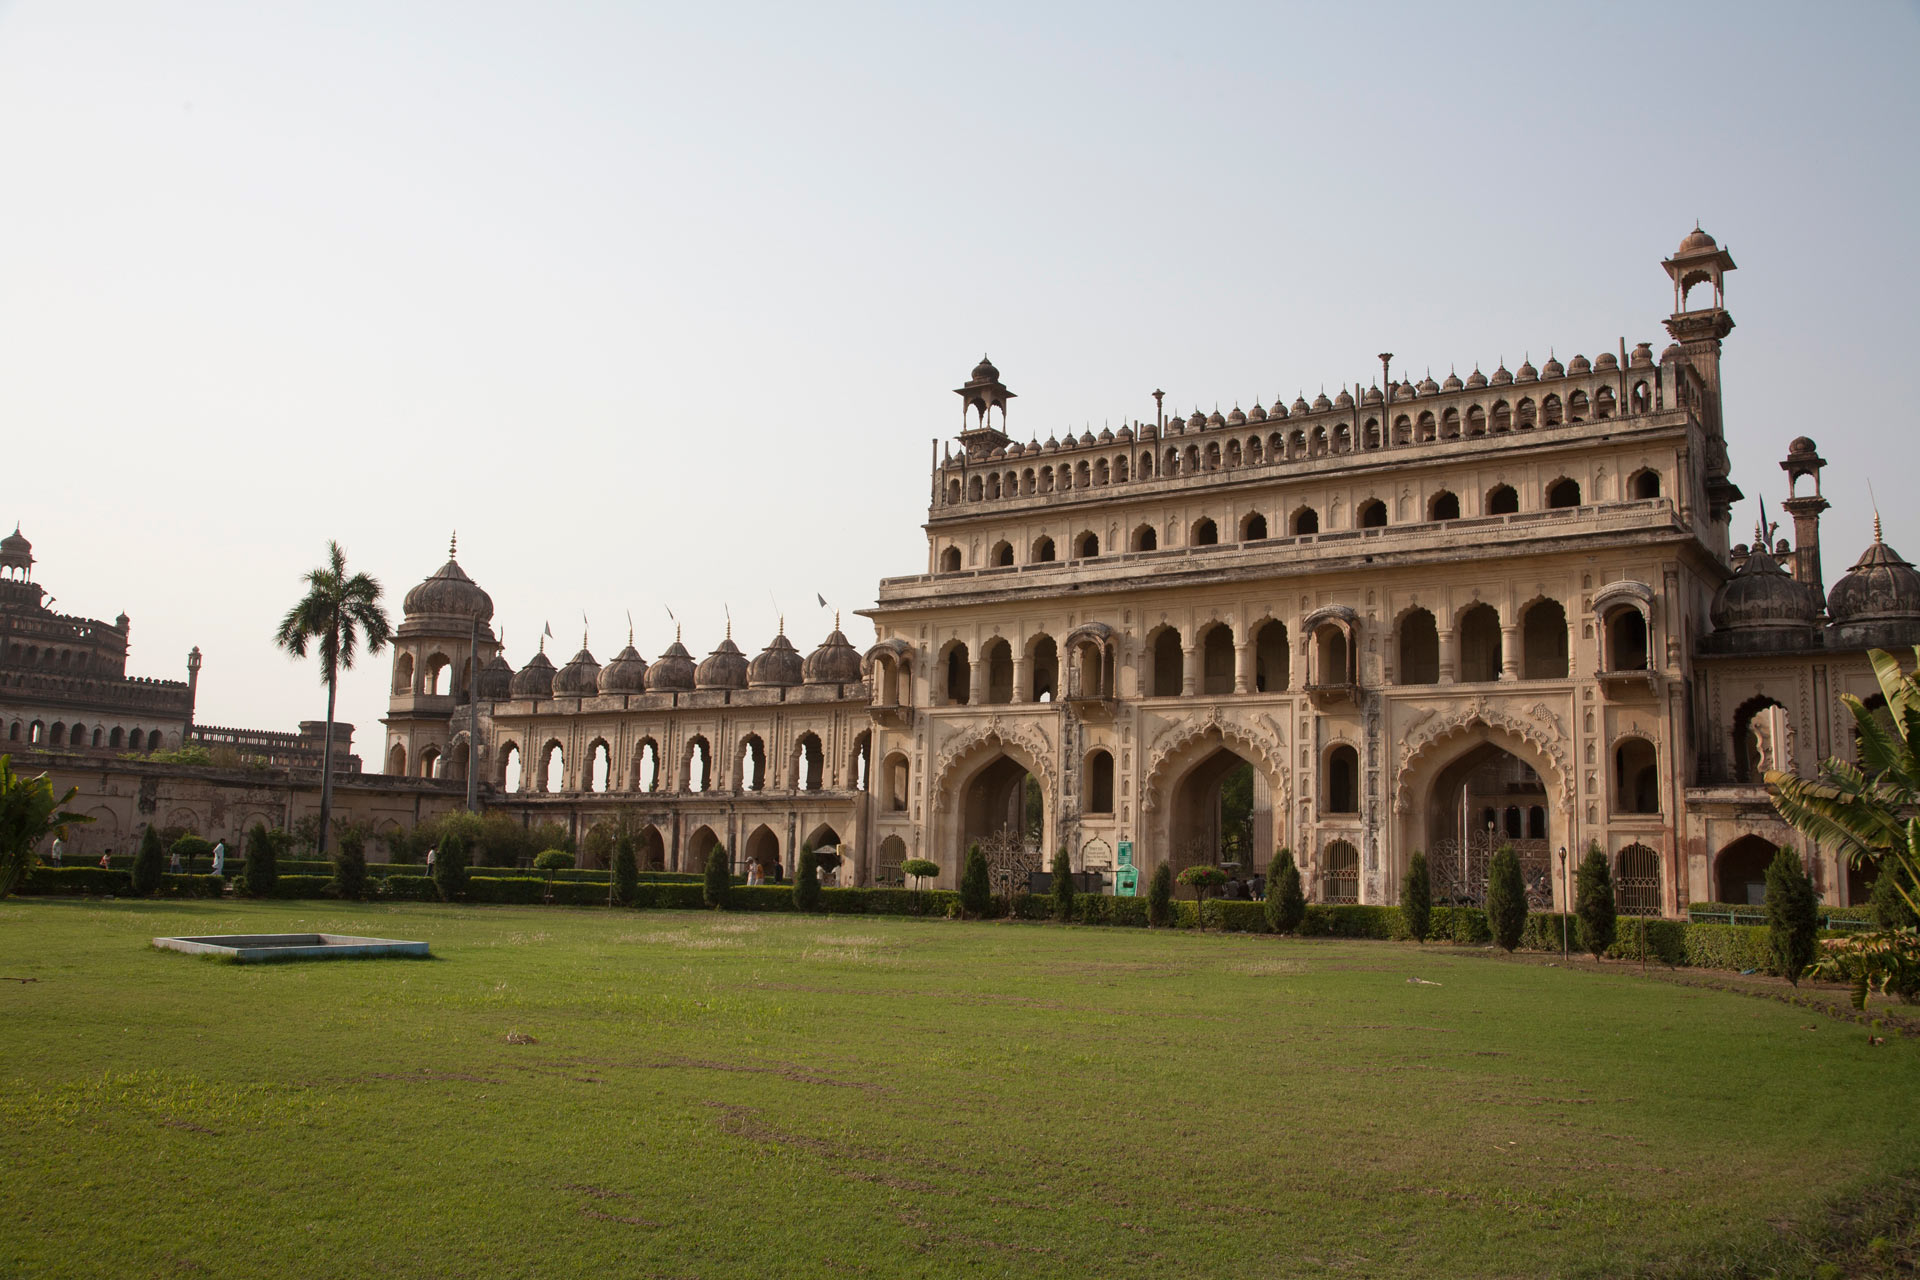 First entrance to the Bara Imambara, Lucknow, Uttar Pradesh, India